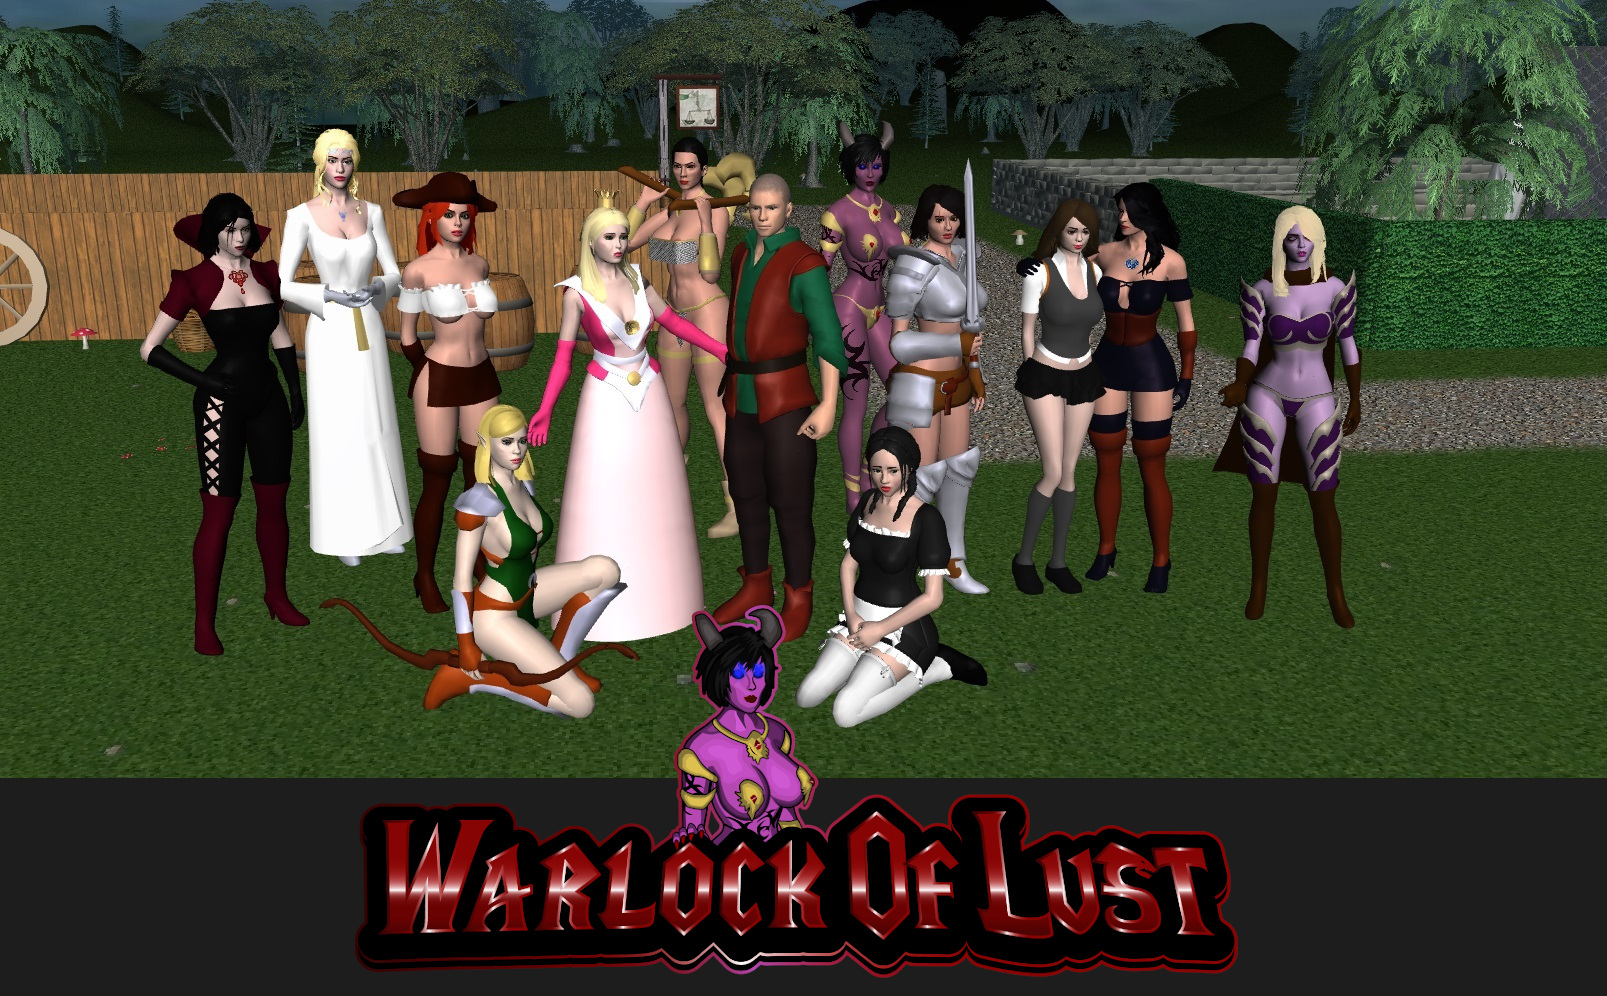 Download Warlock of Lust by Mike Velesk.